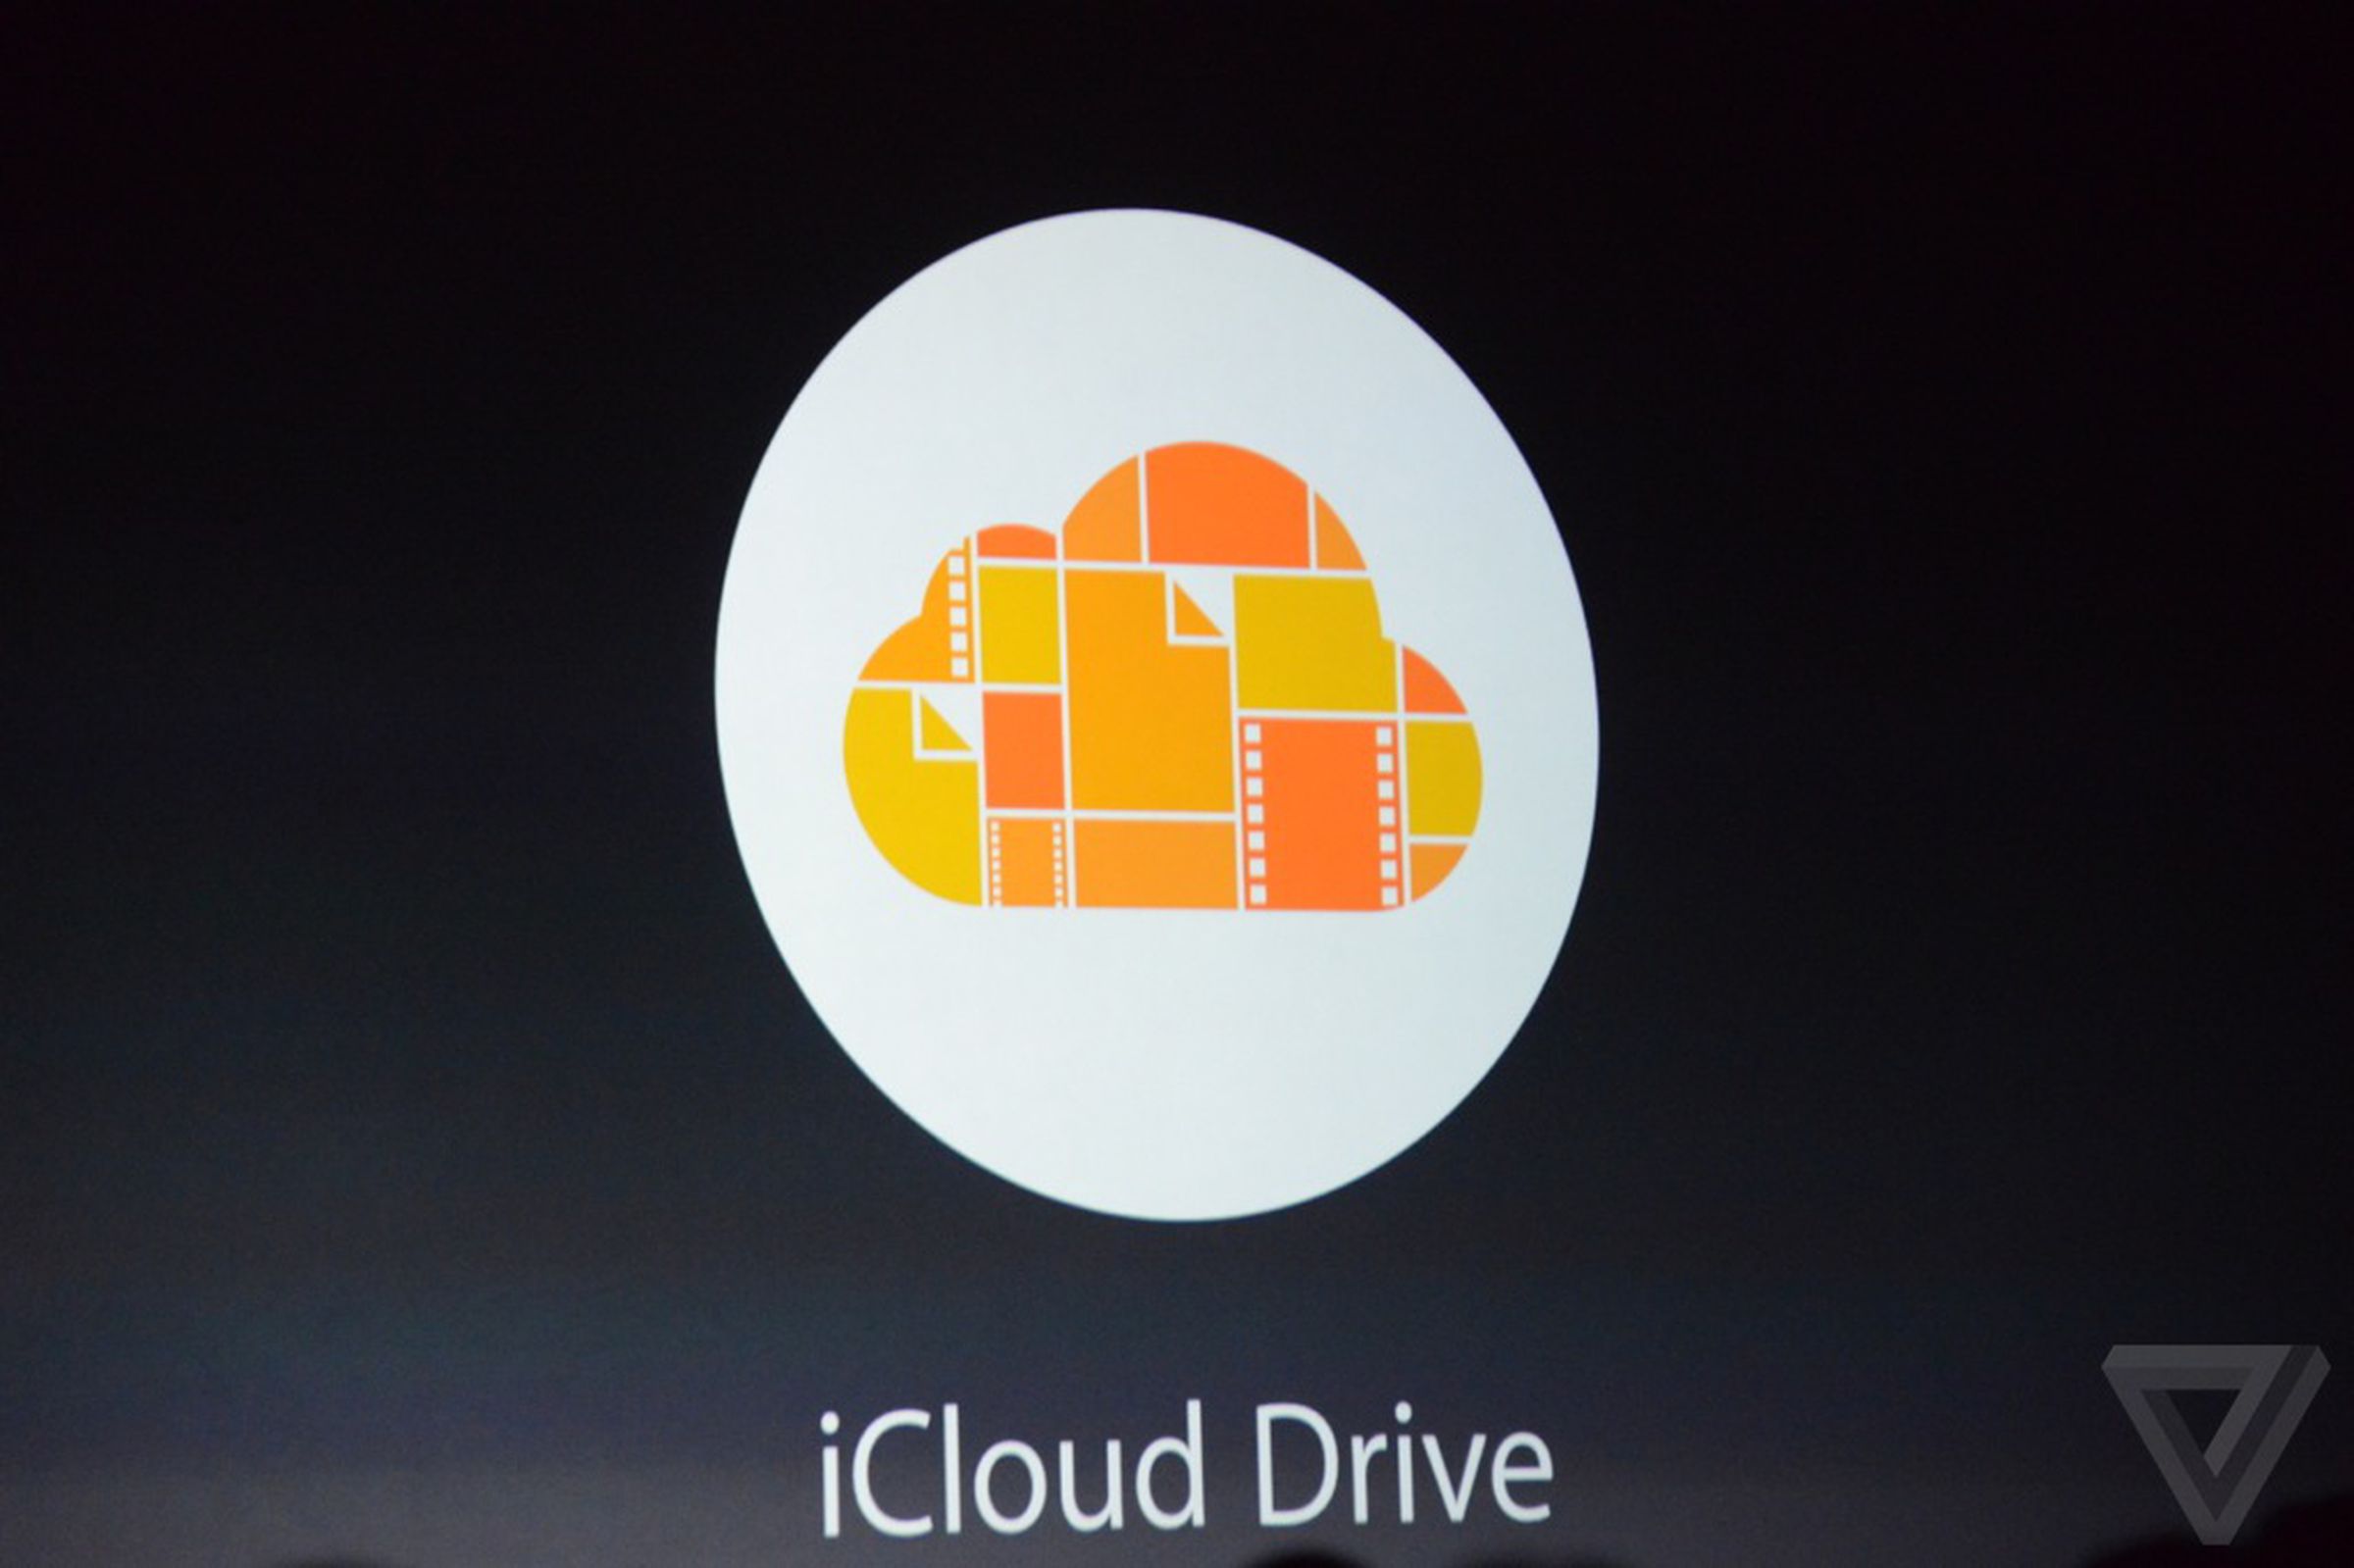 Apple's iCloud Drive photos